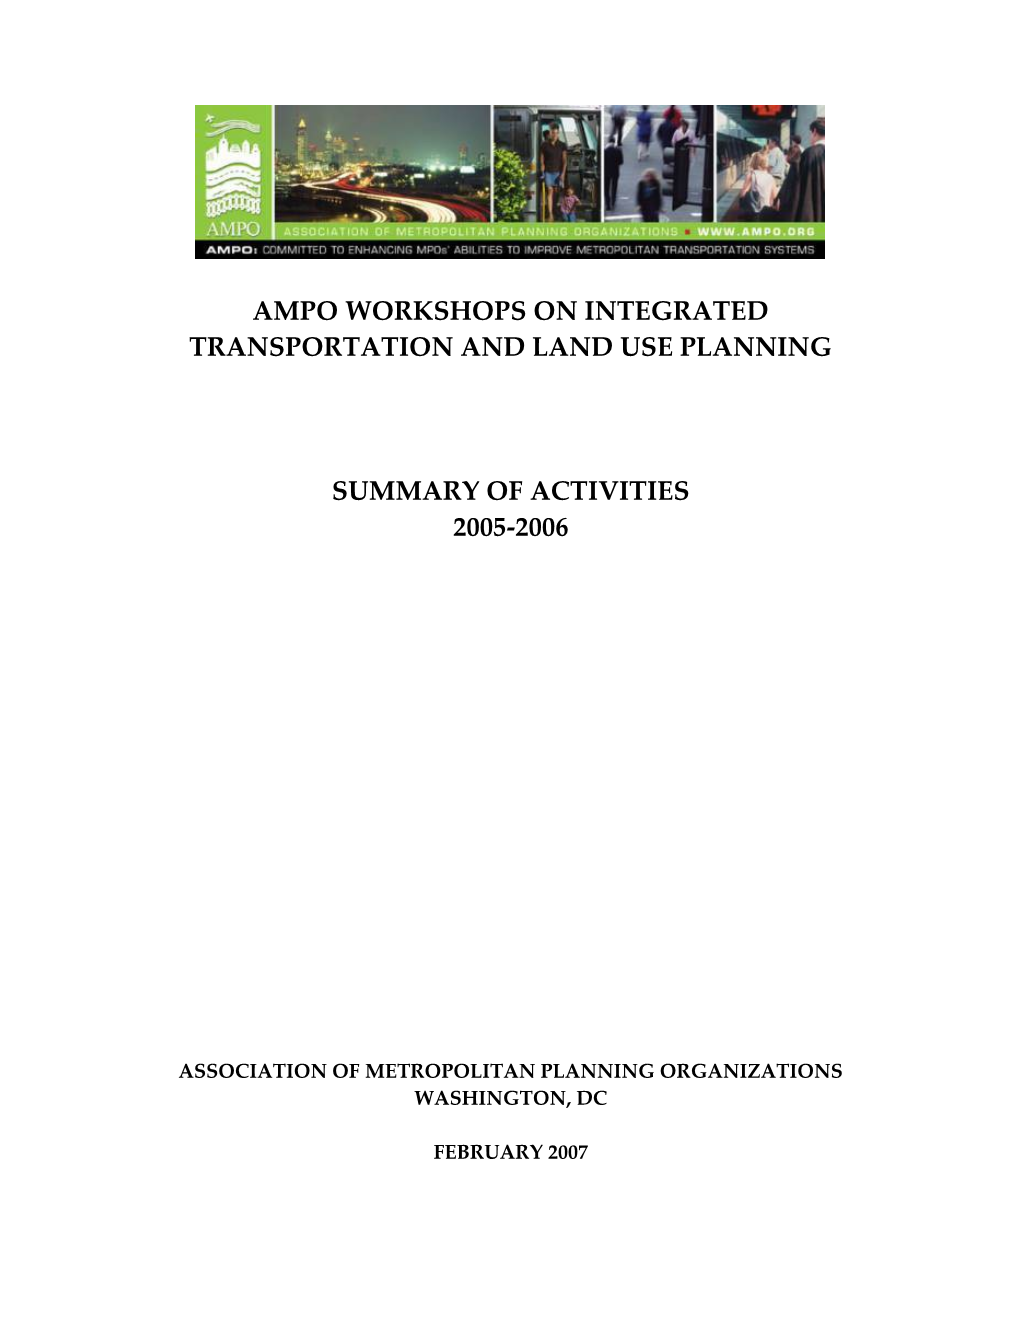 Ampo Workshops on Integrated Transportation & Land Use Planning